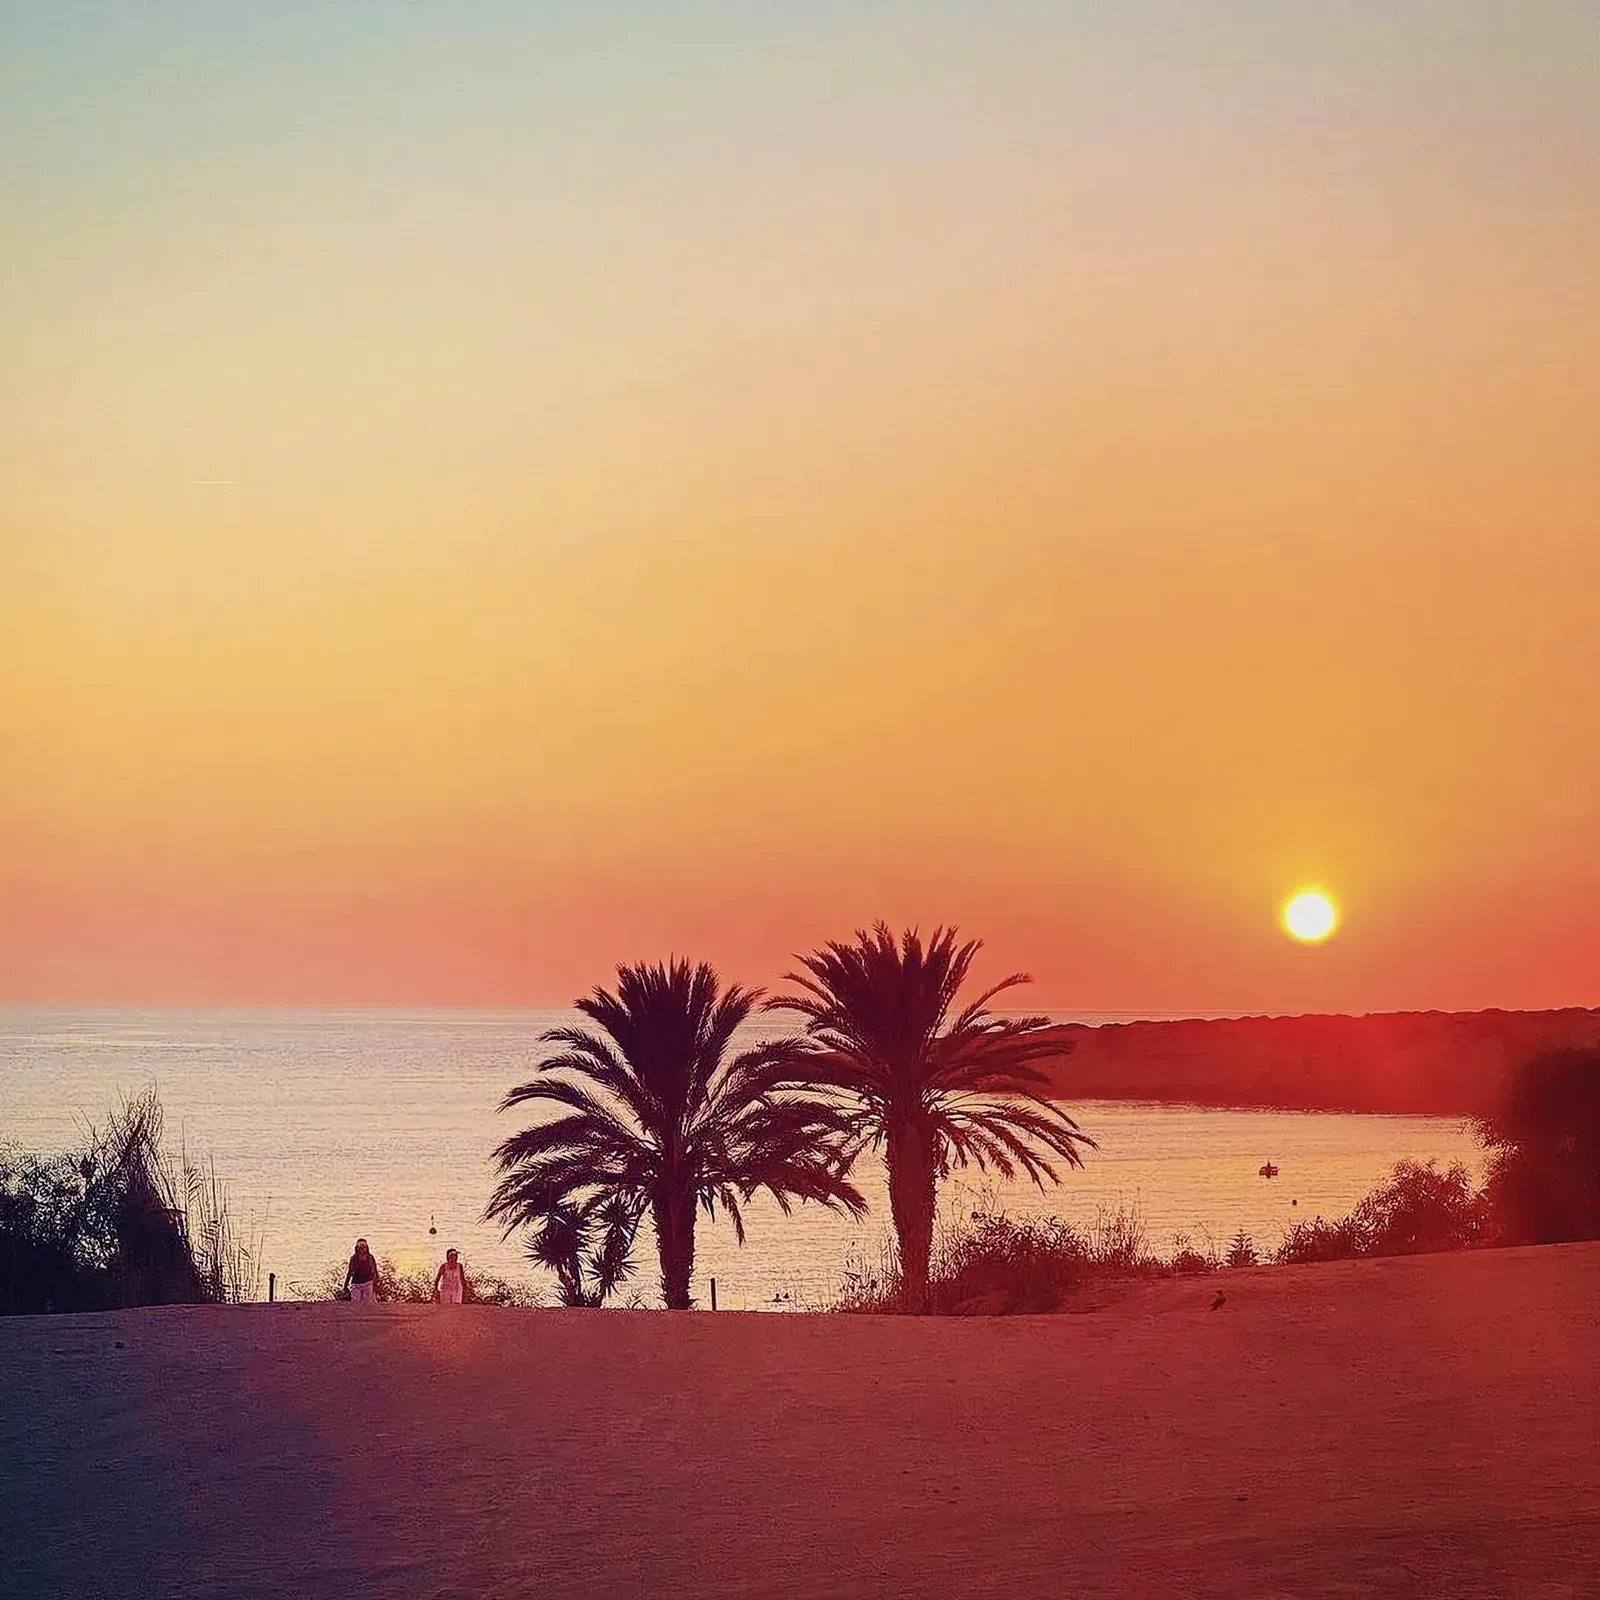 Serene tropical sunset over a tranquil beach.